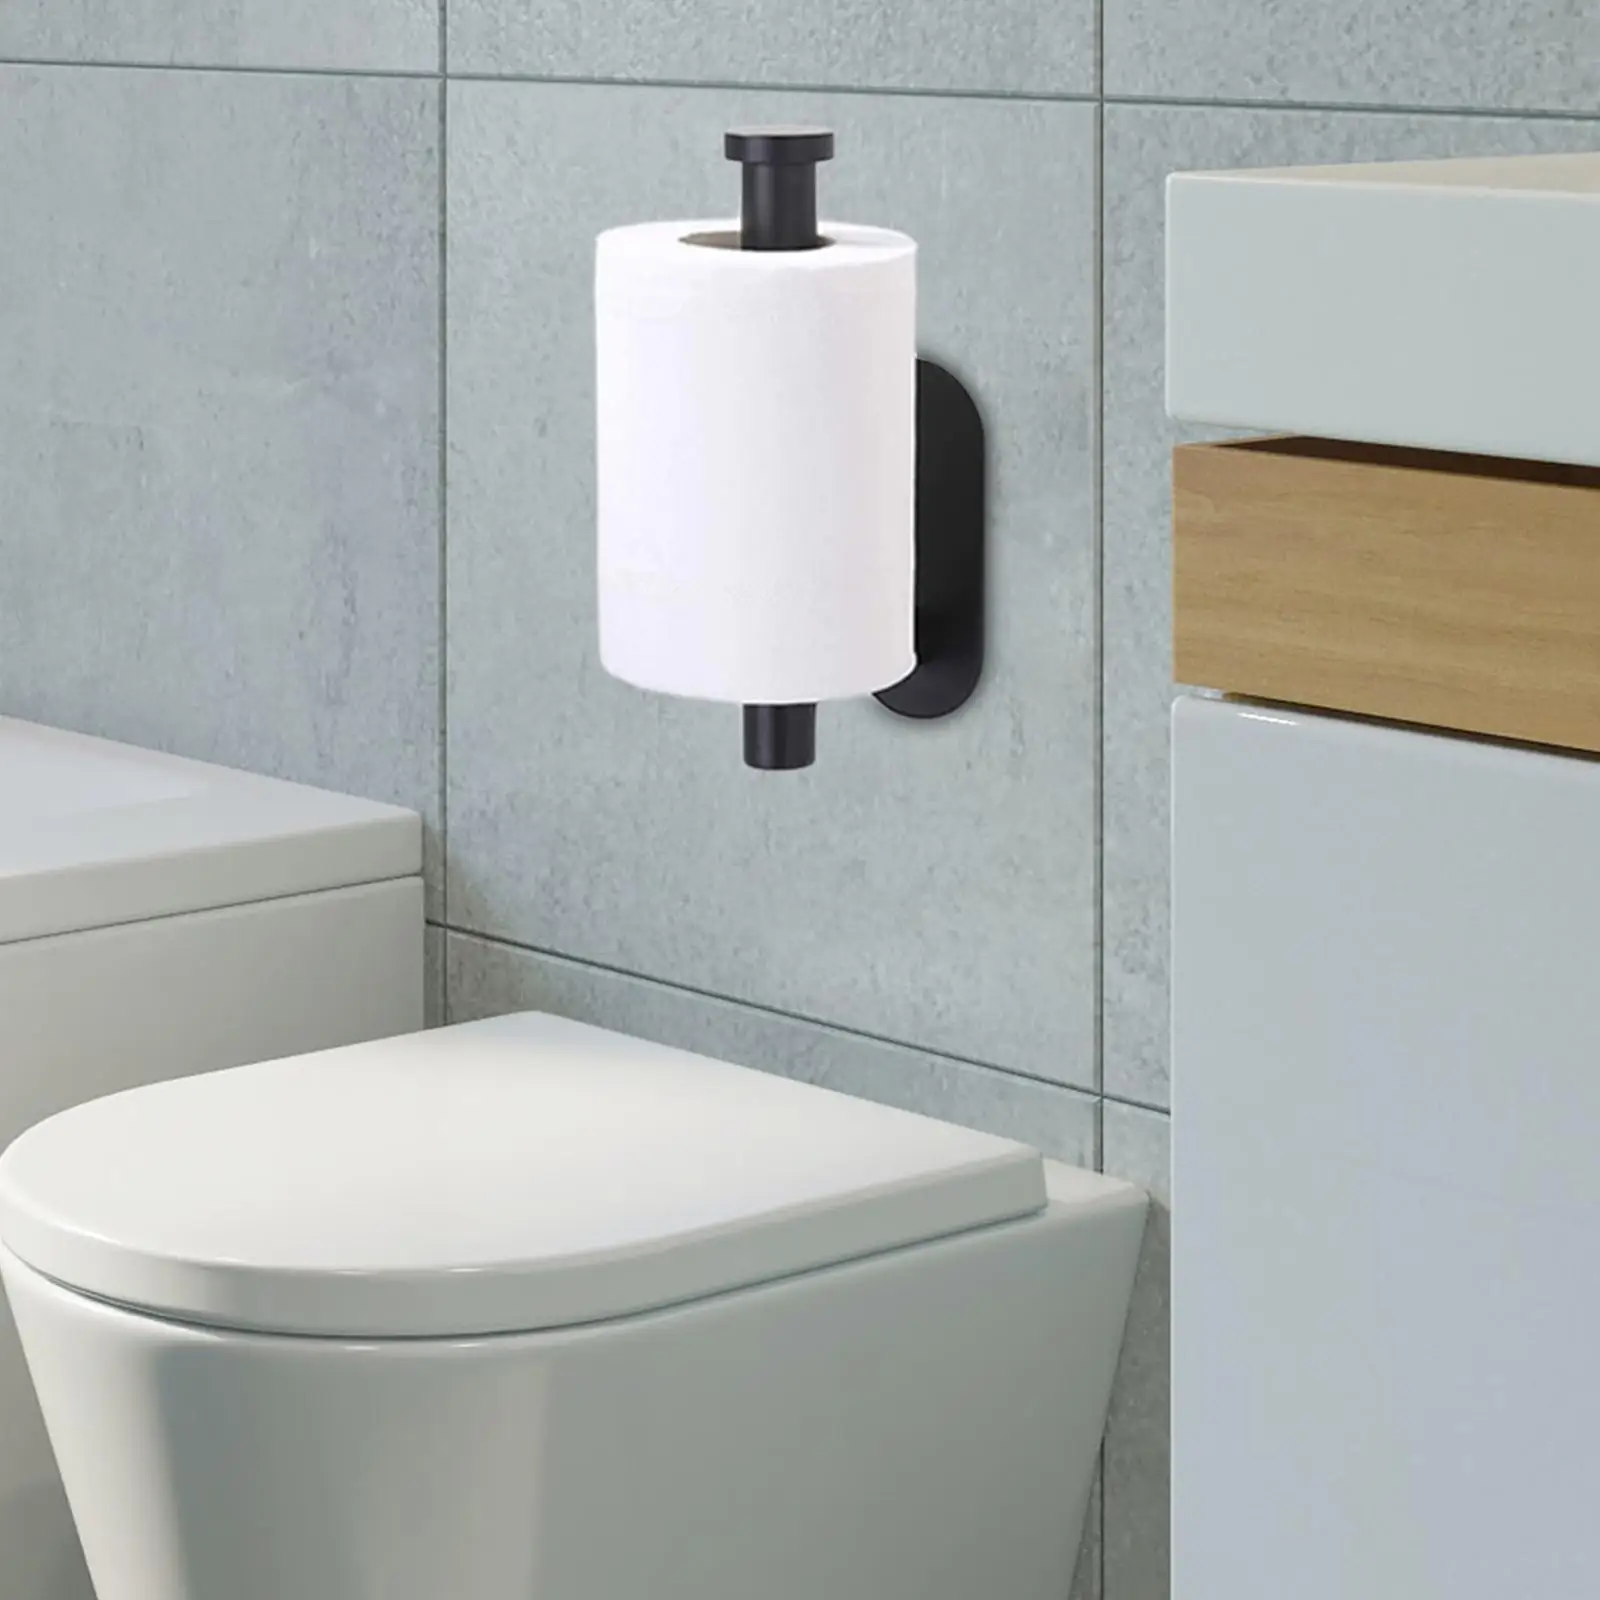 Stainless  Mounted Paper Holder Towel Dispenser Rack Self- under Cabinet Rustproof Hanging Decor  Toilet